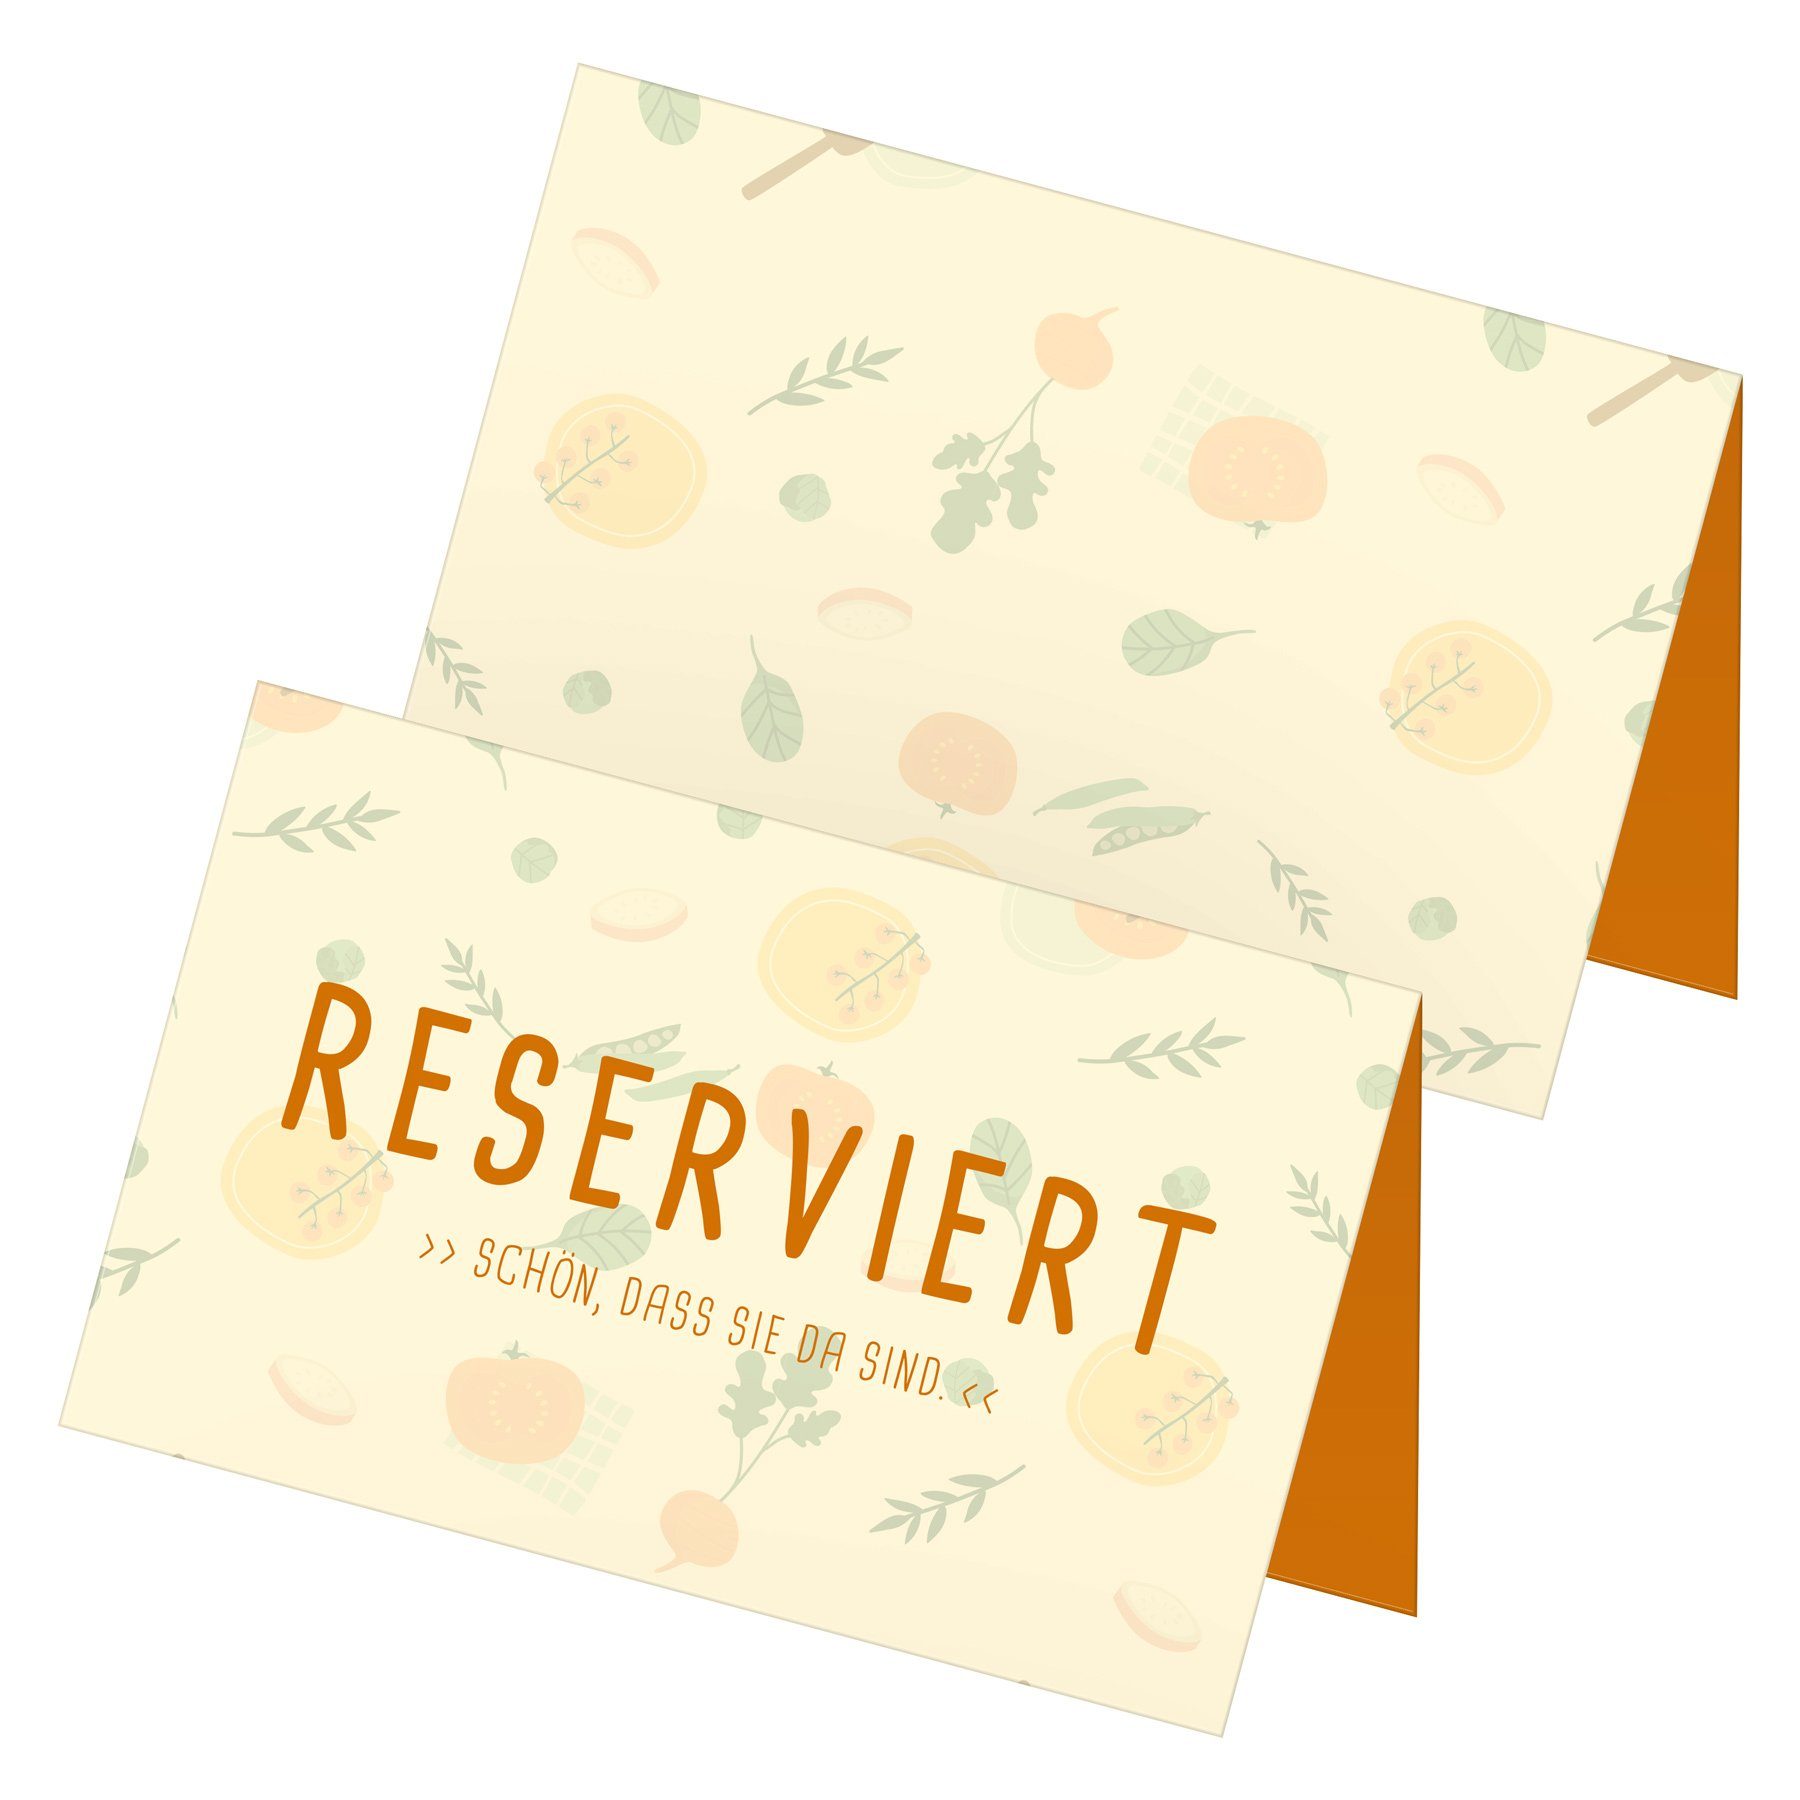 24x Vegan Handlette Pastelltöne itenga itenga Tischkarten Papierdekoration Veggie "Reserviert"